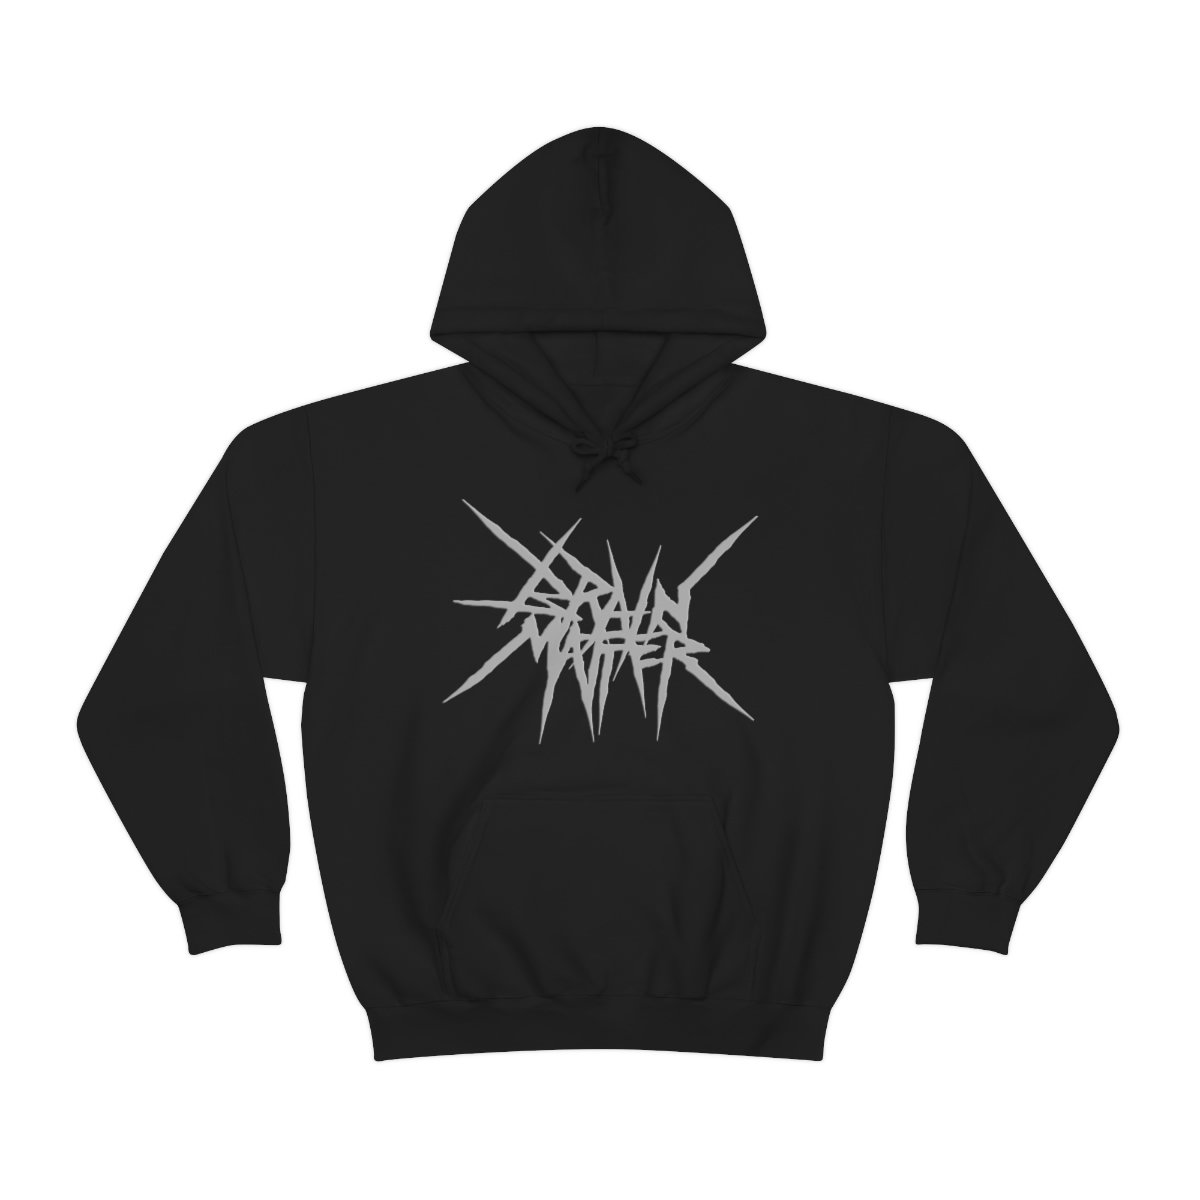 Brain Matter – Grey Logo Pullover Hooded Sweatshirt